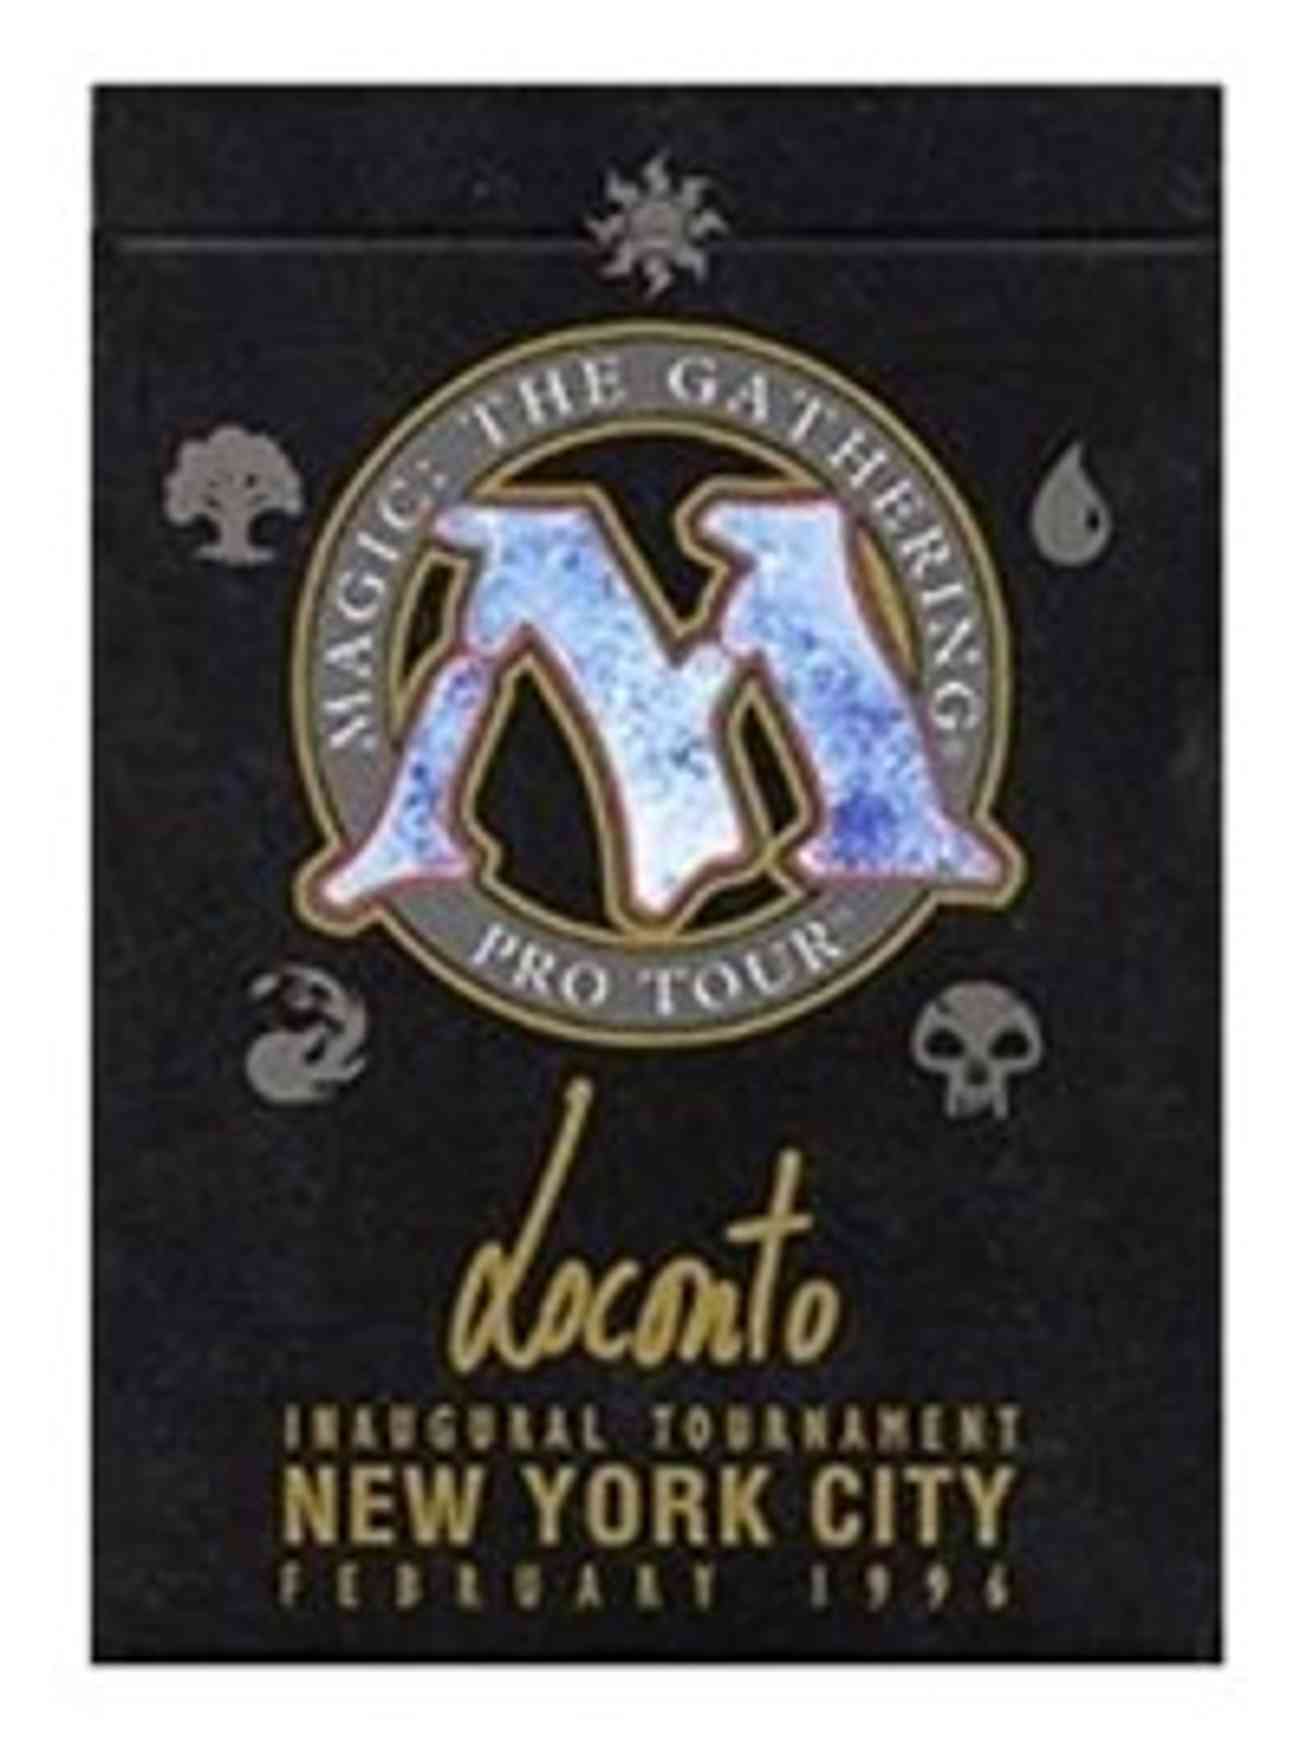 World Championship Deck: 1996 New York City - Michael Loconto magic card front